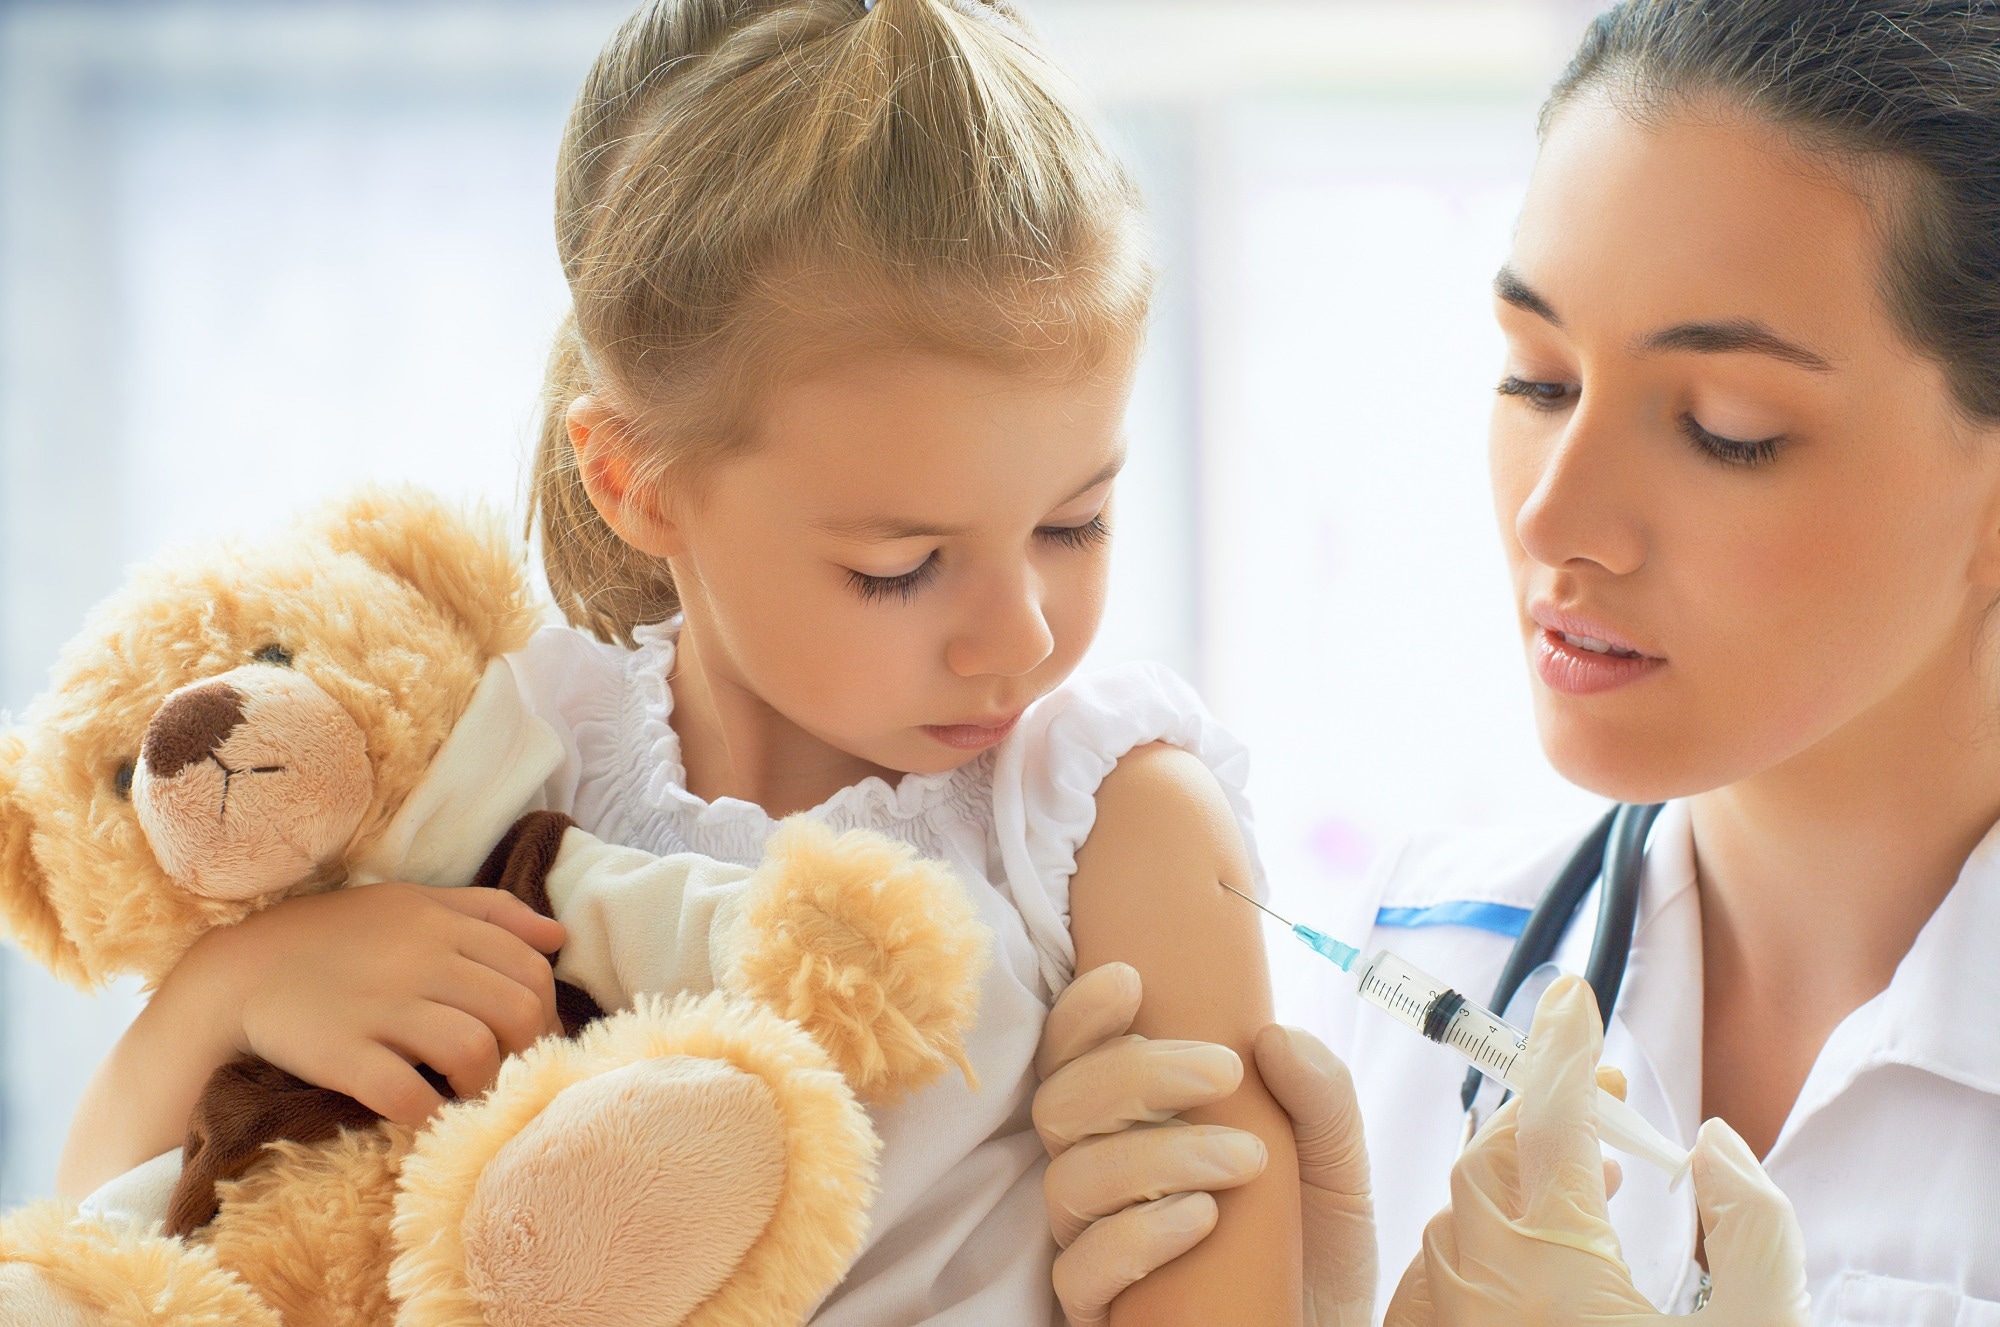 Study: Optimal timing of influenza vaccination in young children: population based cohort study. Image Credit: Yuganov Konstantin/Shutterstock.com